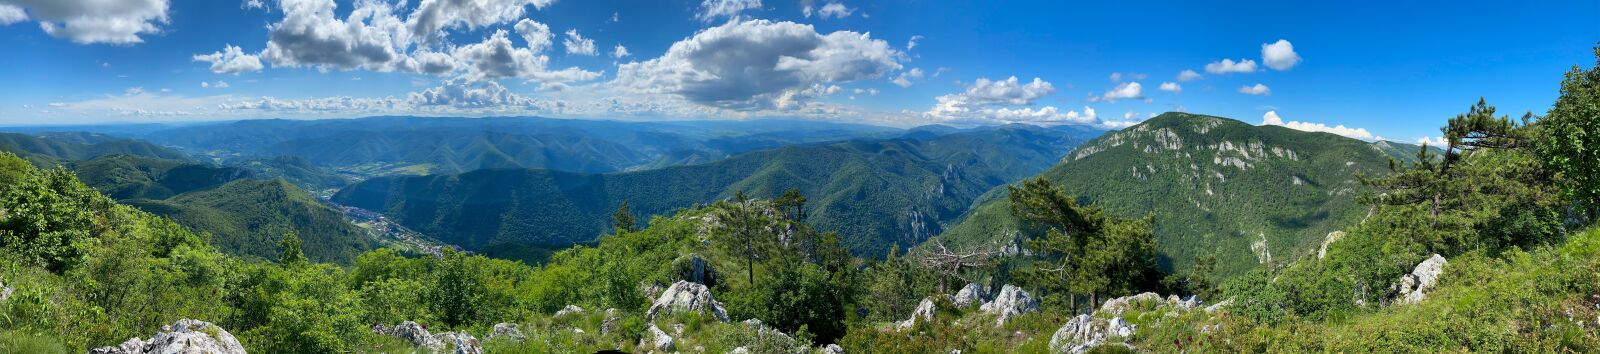 iPhone 11 Pro back camera 4.25mm f/1.8 sample photo. Mountain, mountains, landscape photography